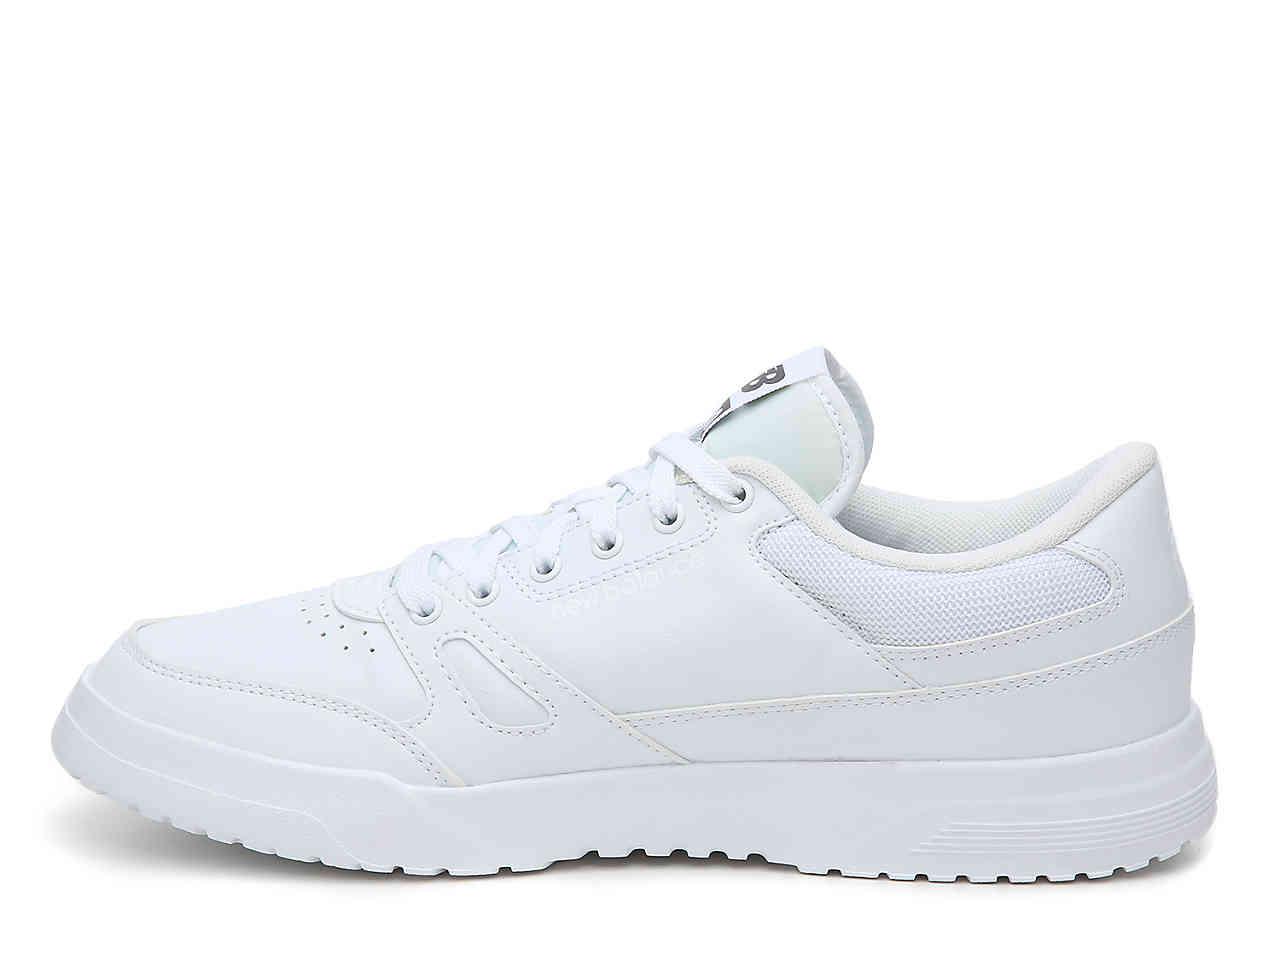 New Balance Ct20 Sneaker in White for Men - Lyst